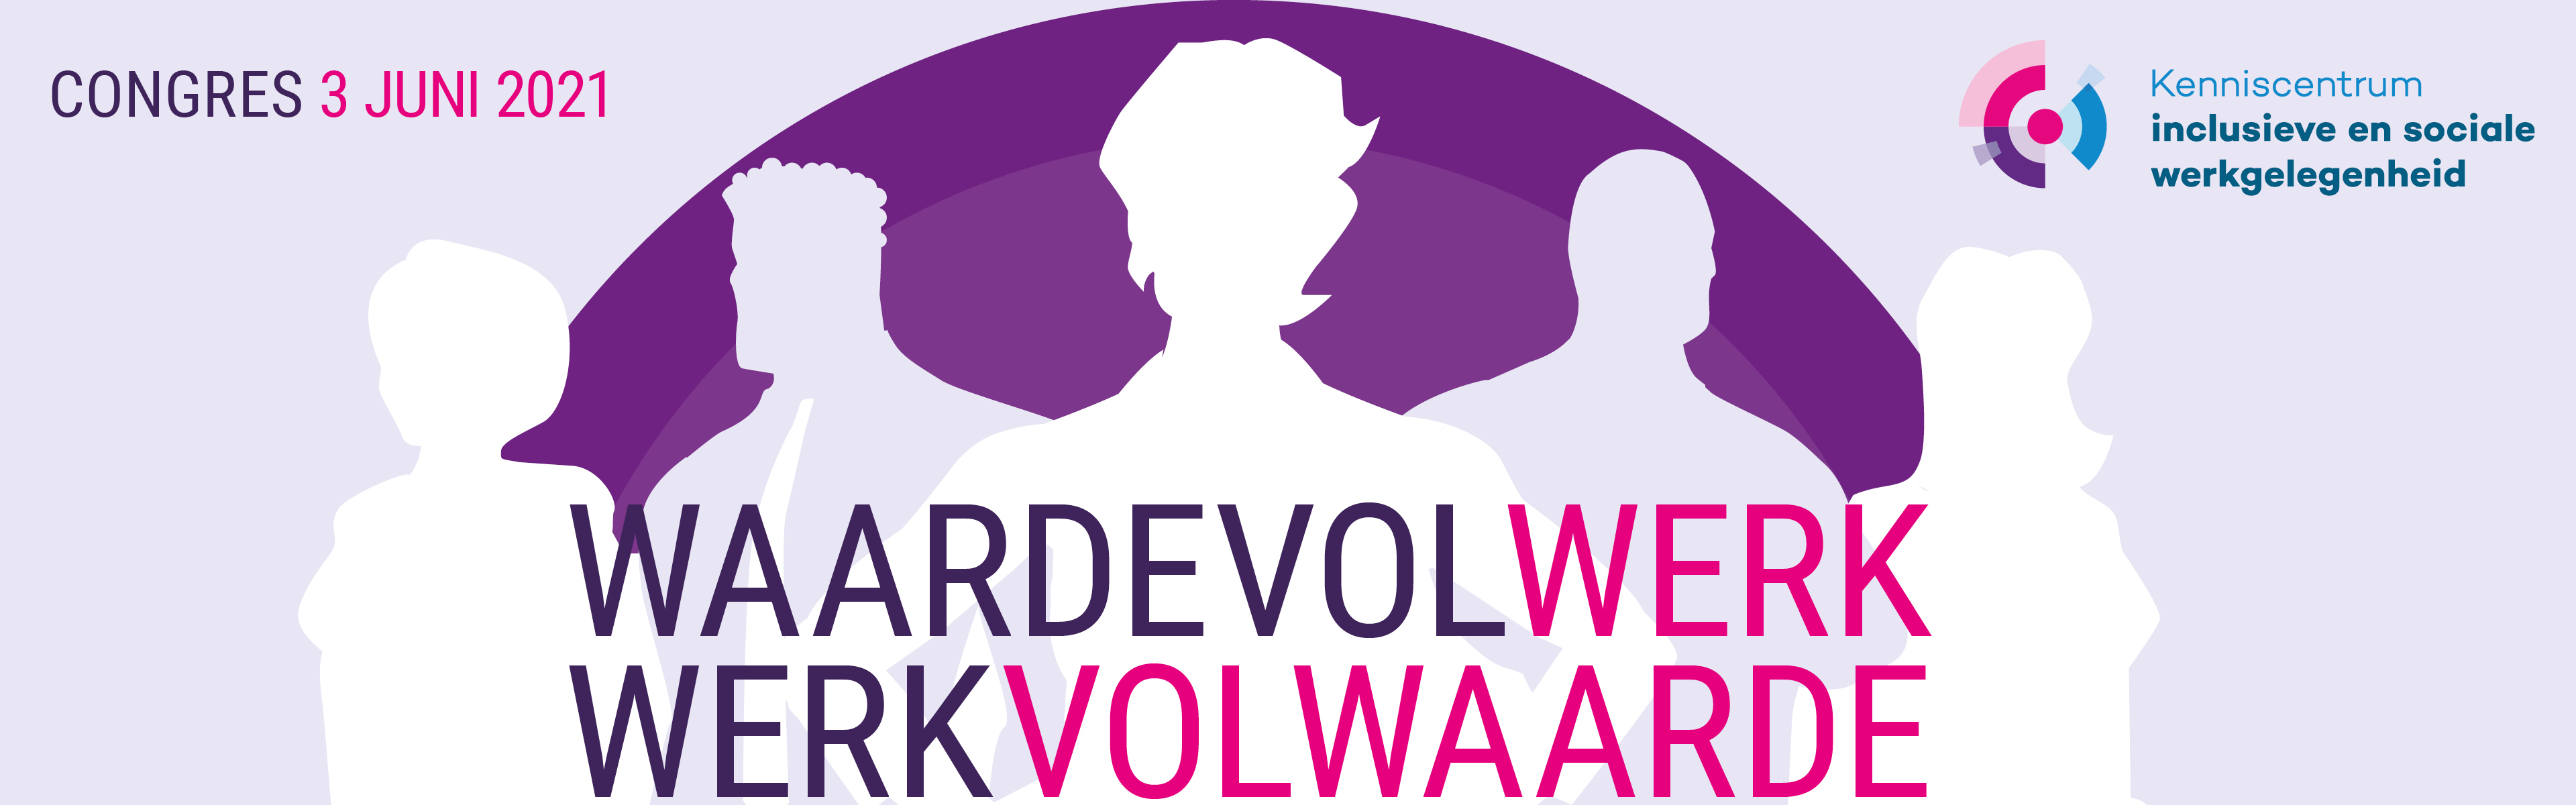 globaal Inspiratie industrie Online congres Waardevolwerk / Werkvolwaarde | Sociaal Werk Nederland